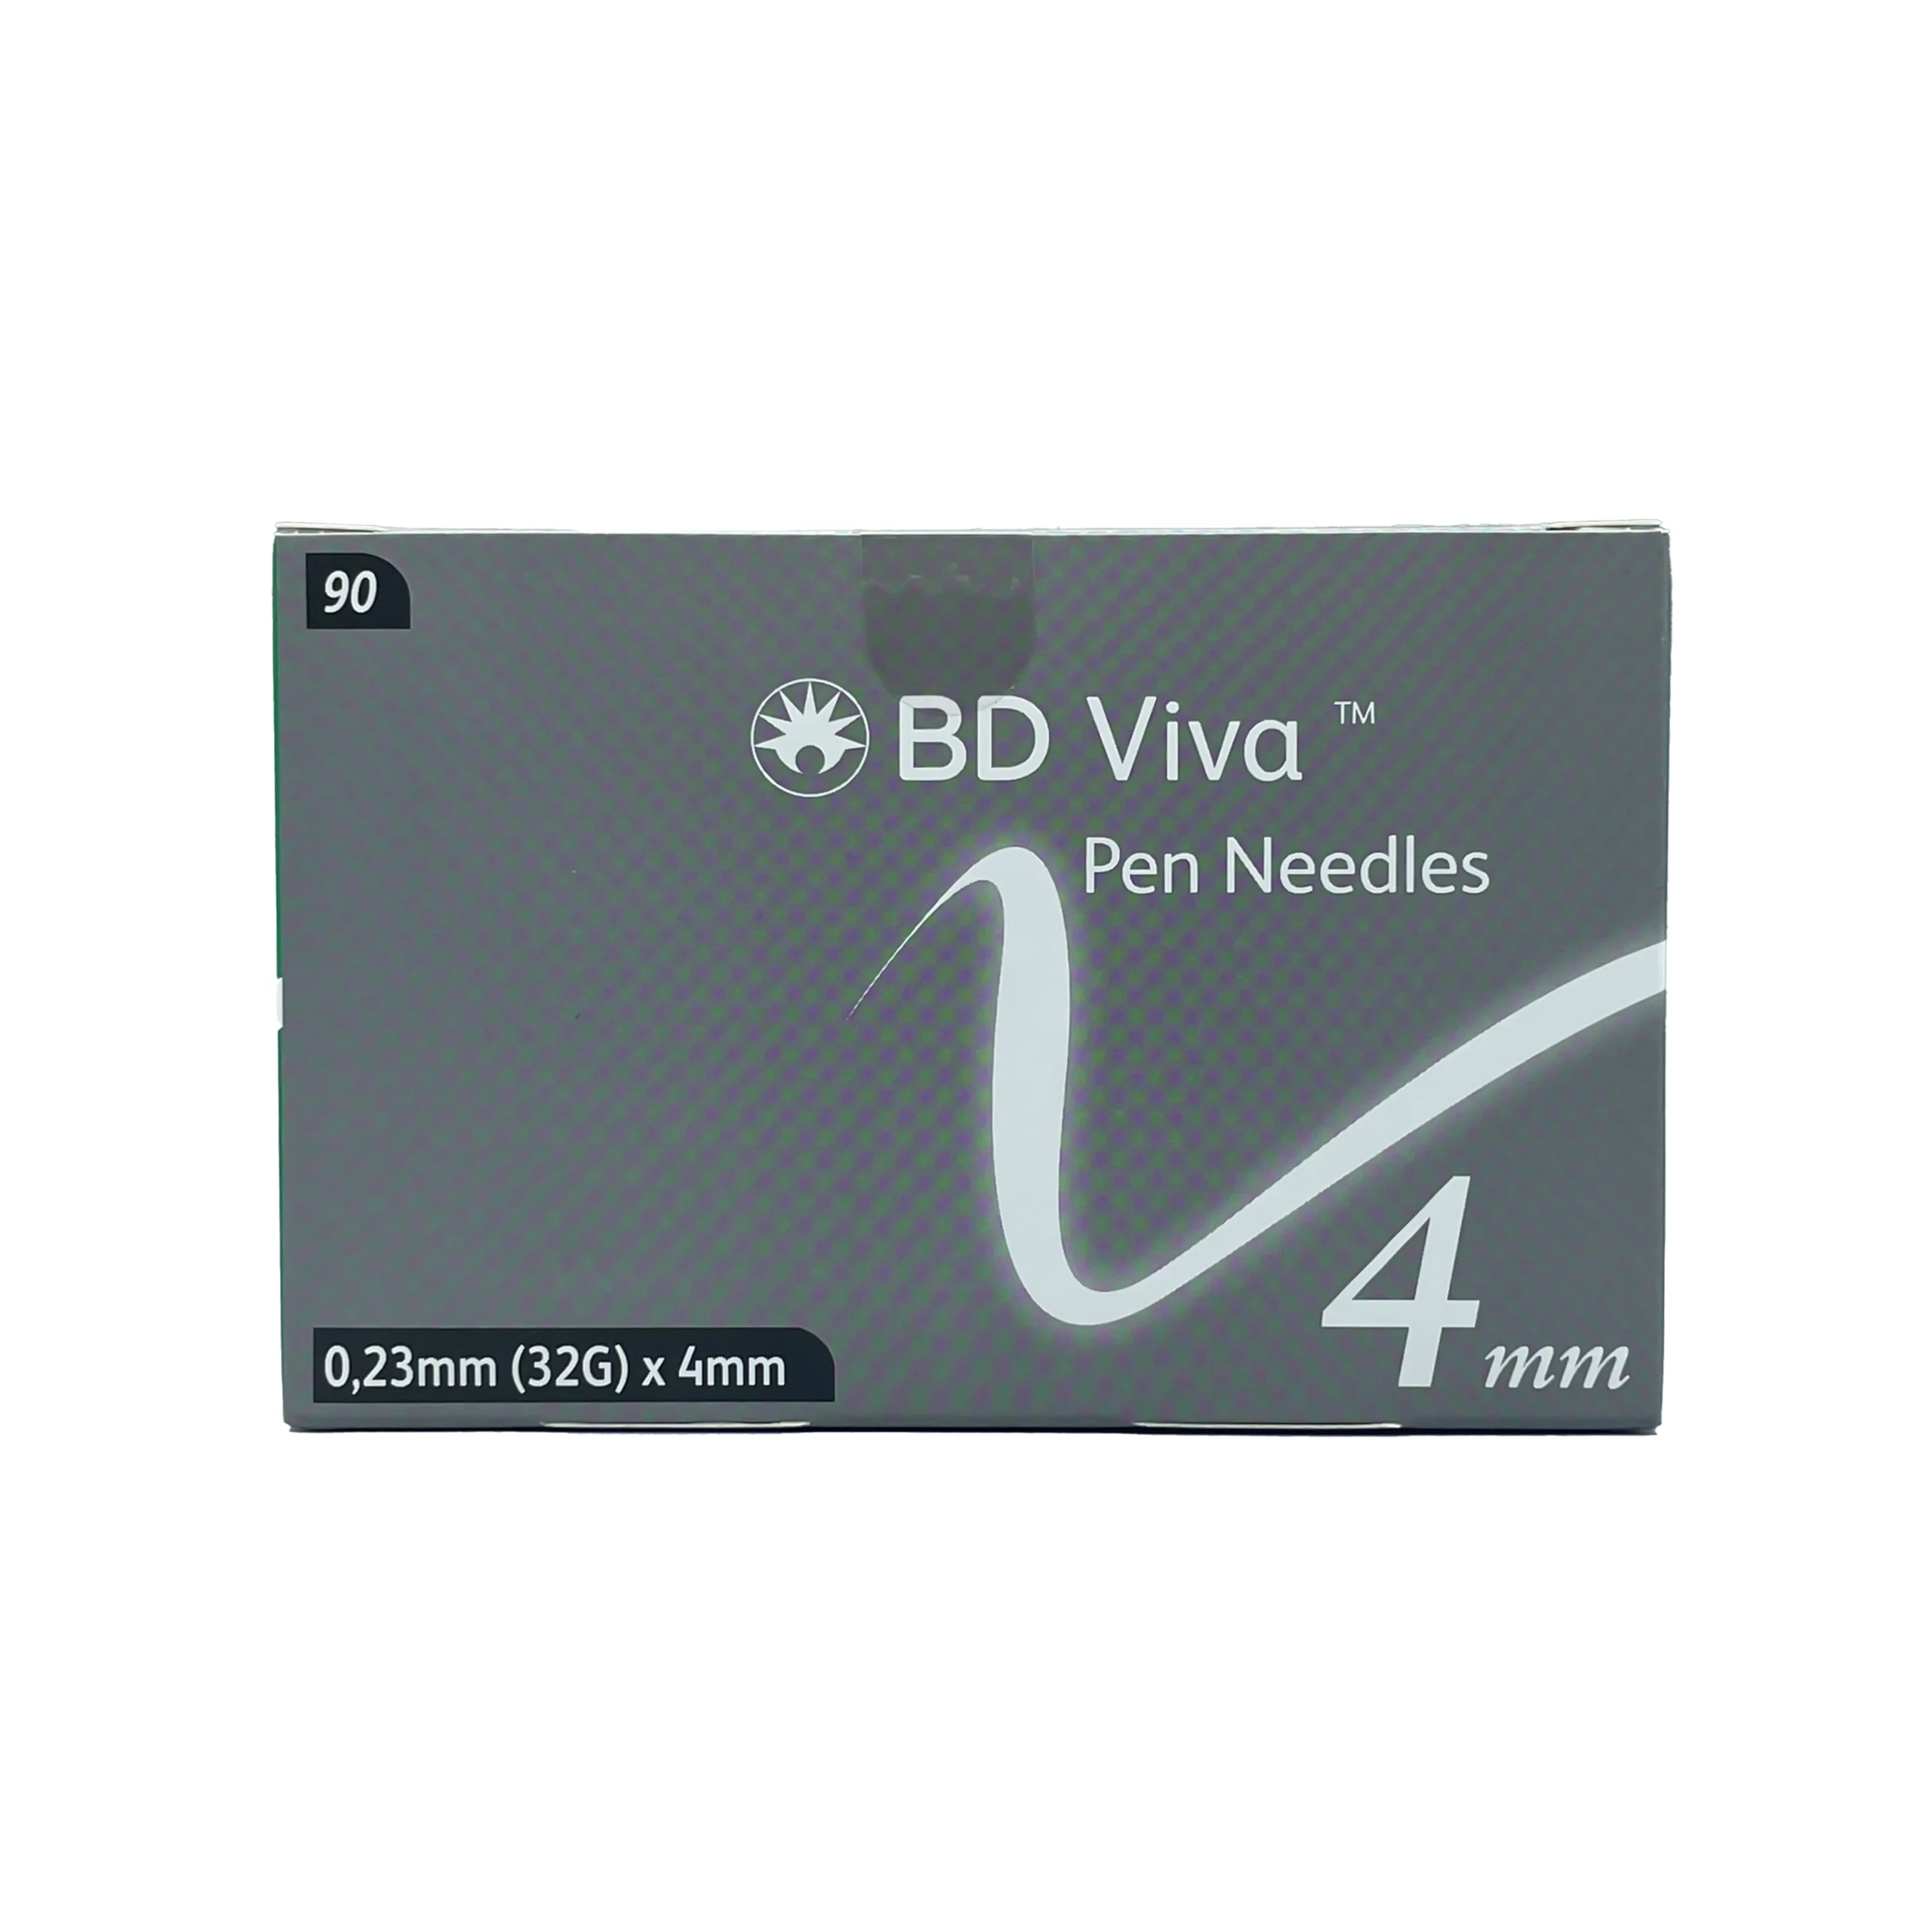 BD Viva 4mm Pen Needles (4)